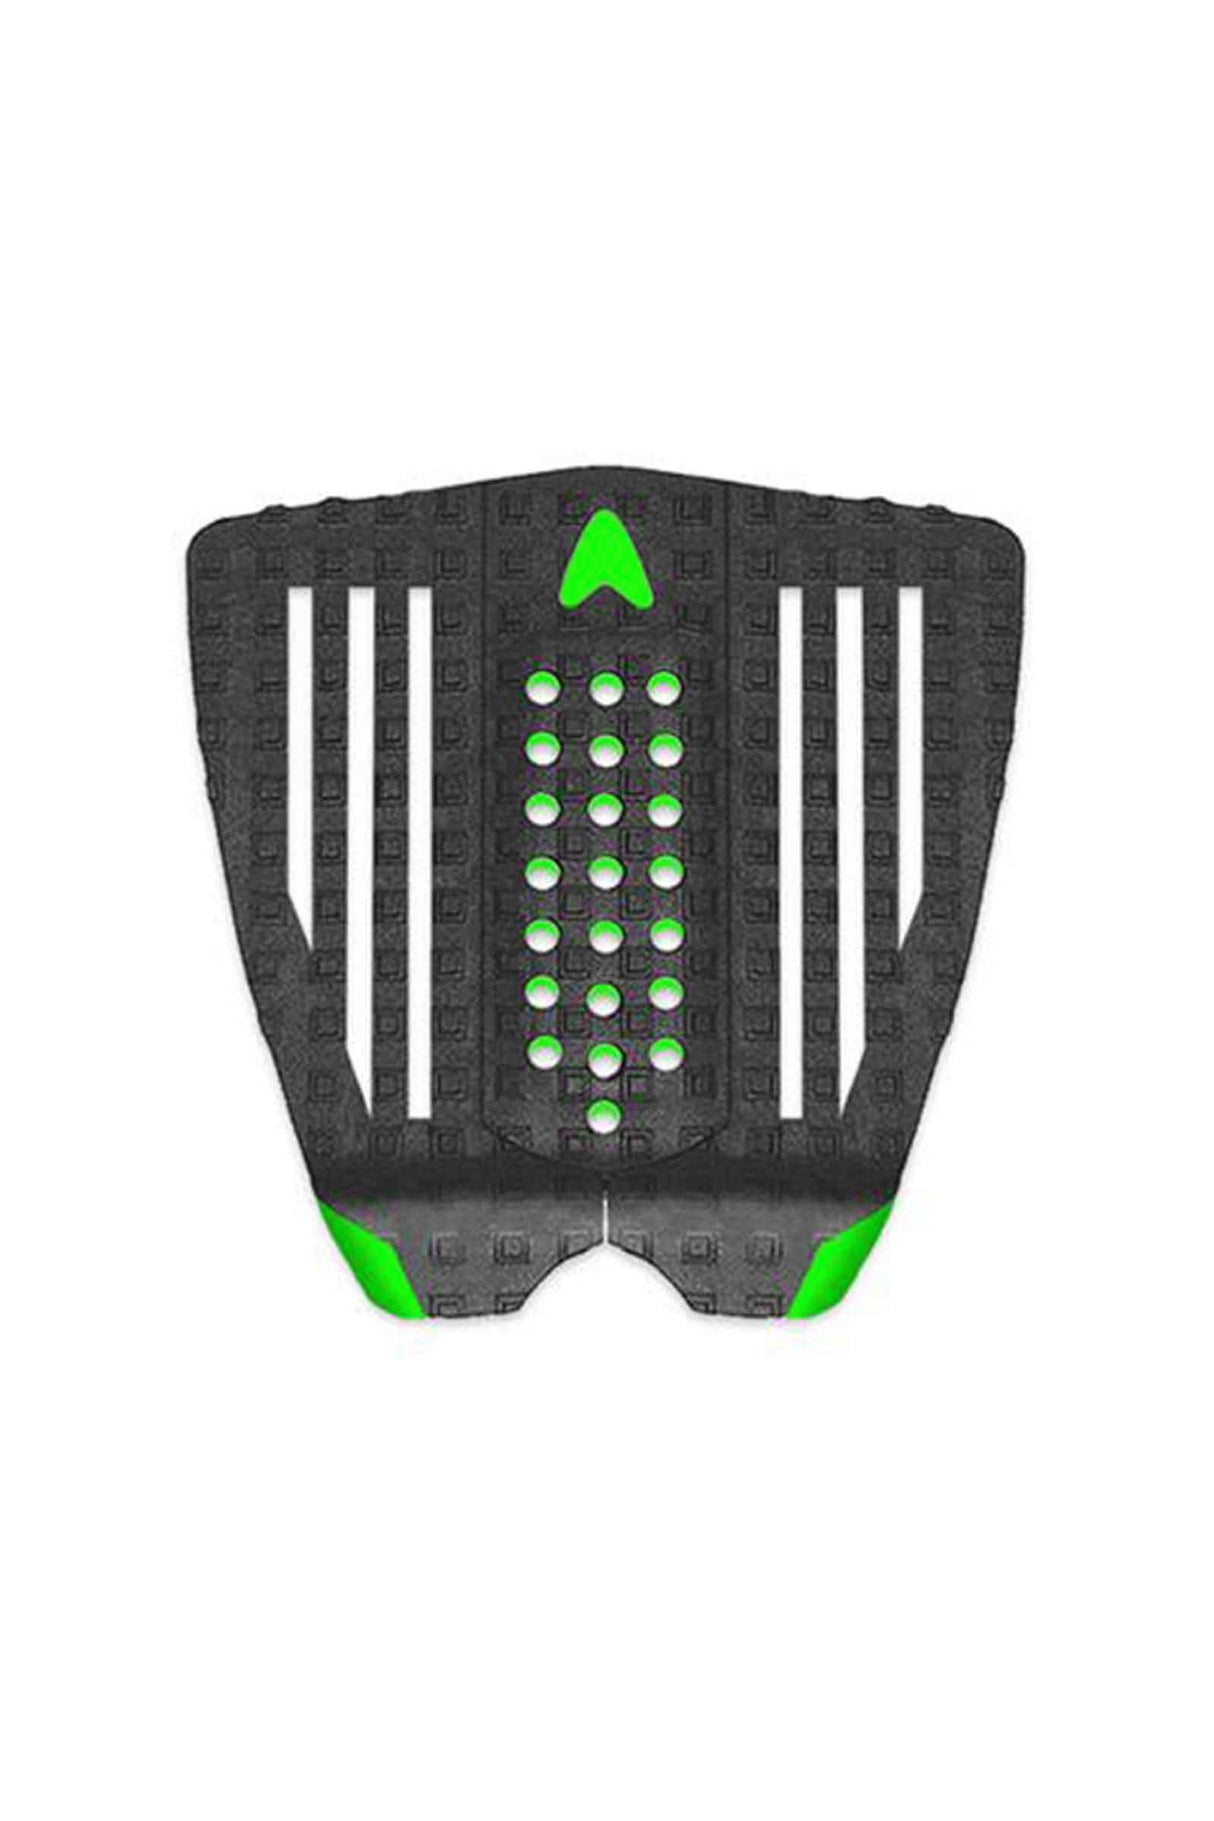 Astro Deck Gudauskus Pad - Black / Green Grip Pad Traction